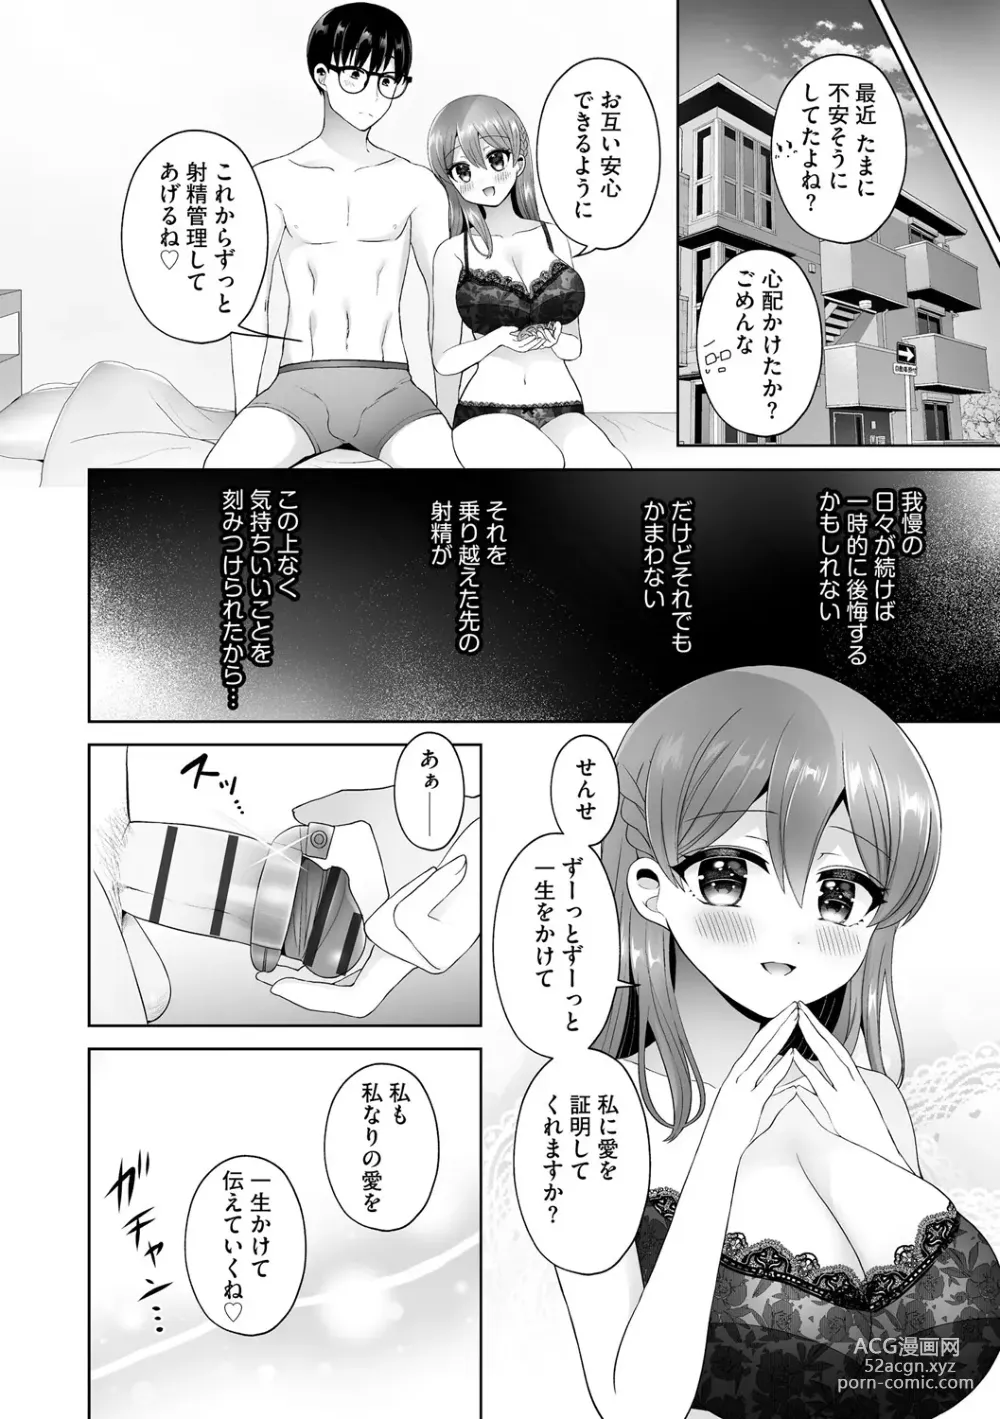 Page 354 of manga Cyberia Plus Vol. 20